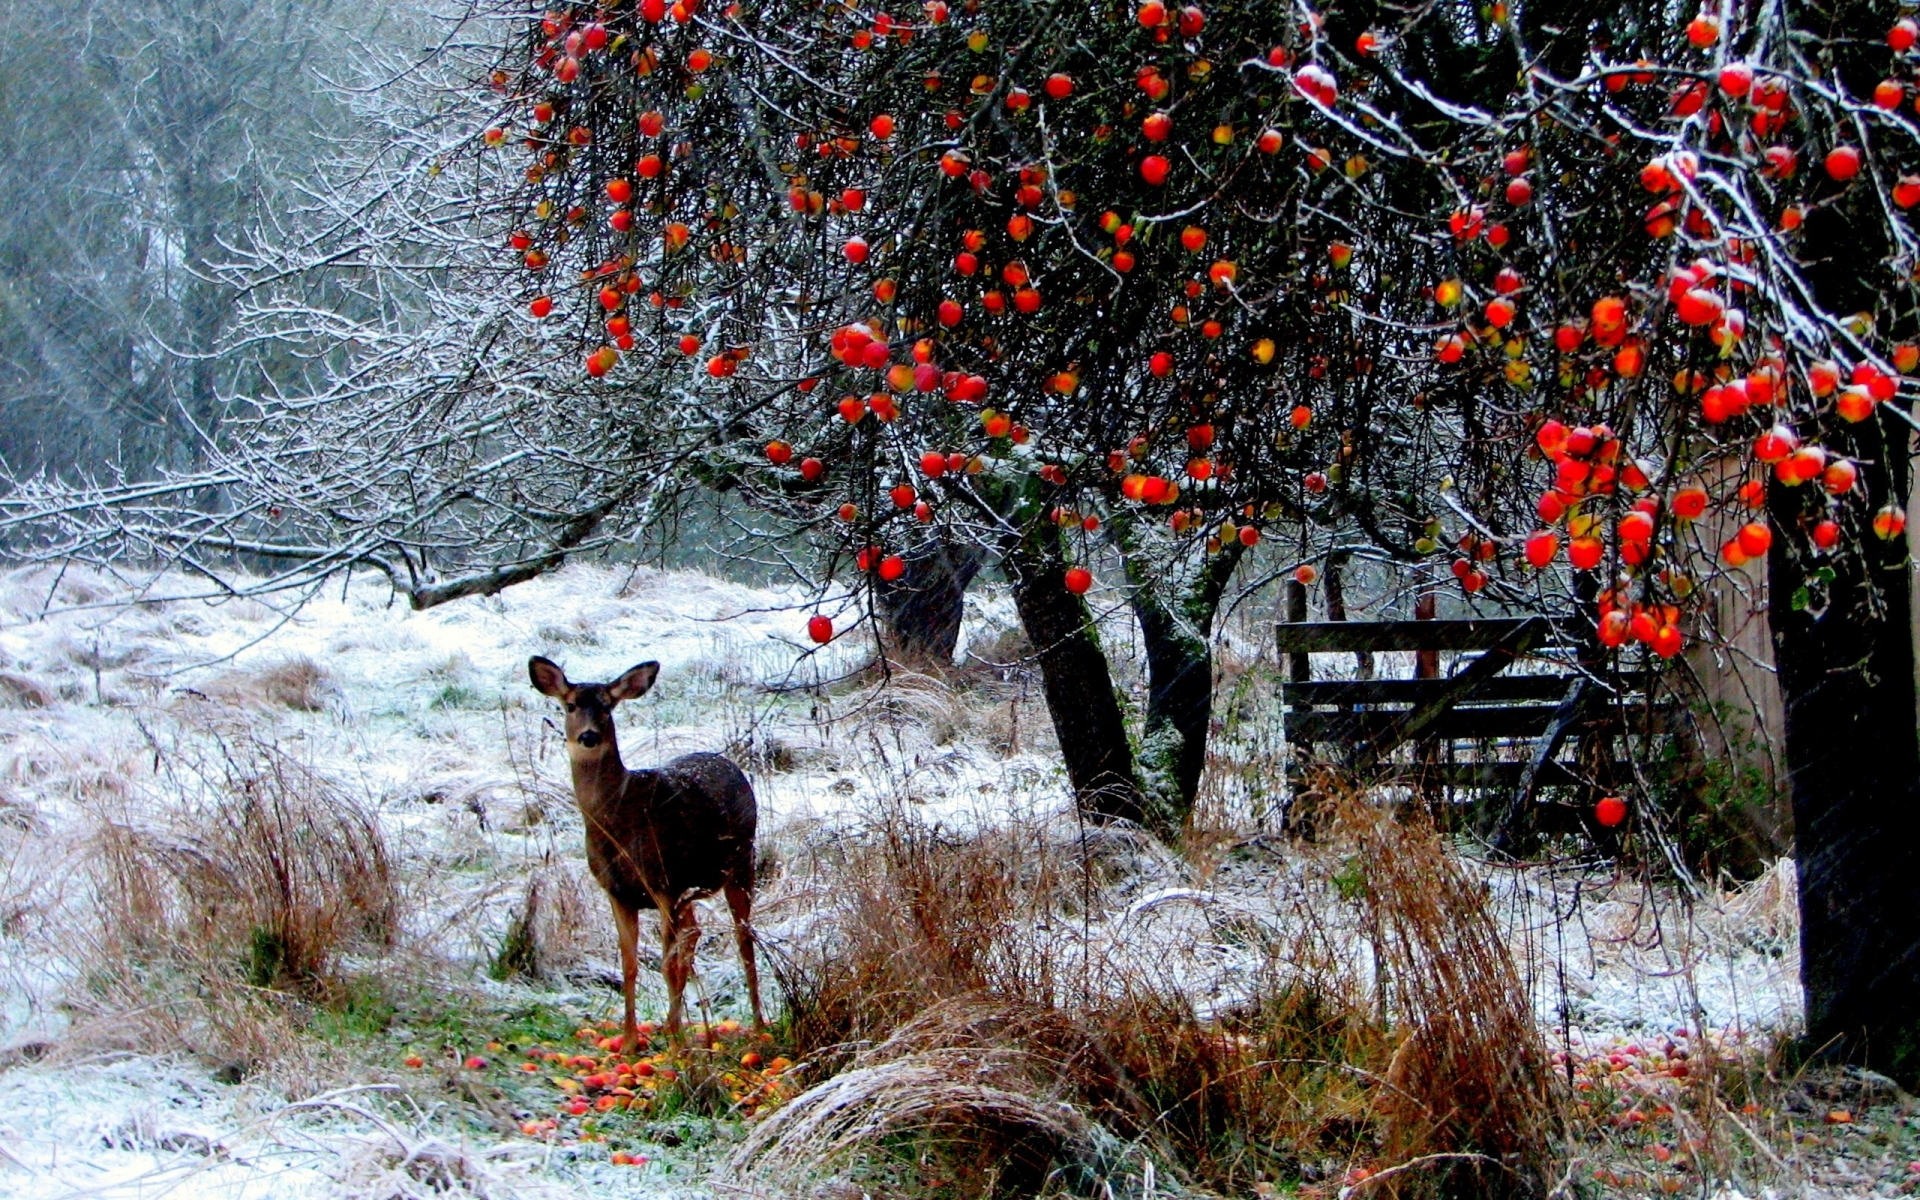 Landscapes Nature Animals Deer Winter Snow Snowing Snowflakes Berries